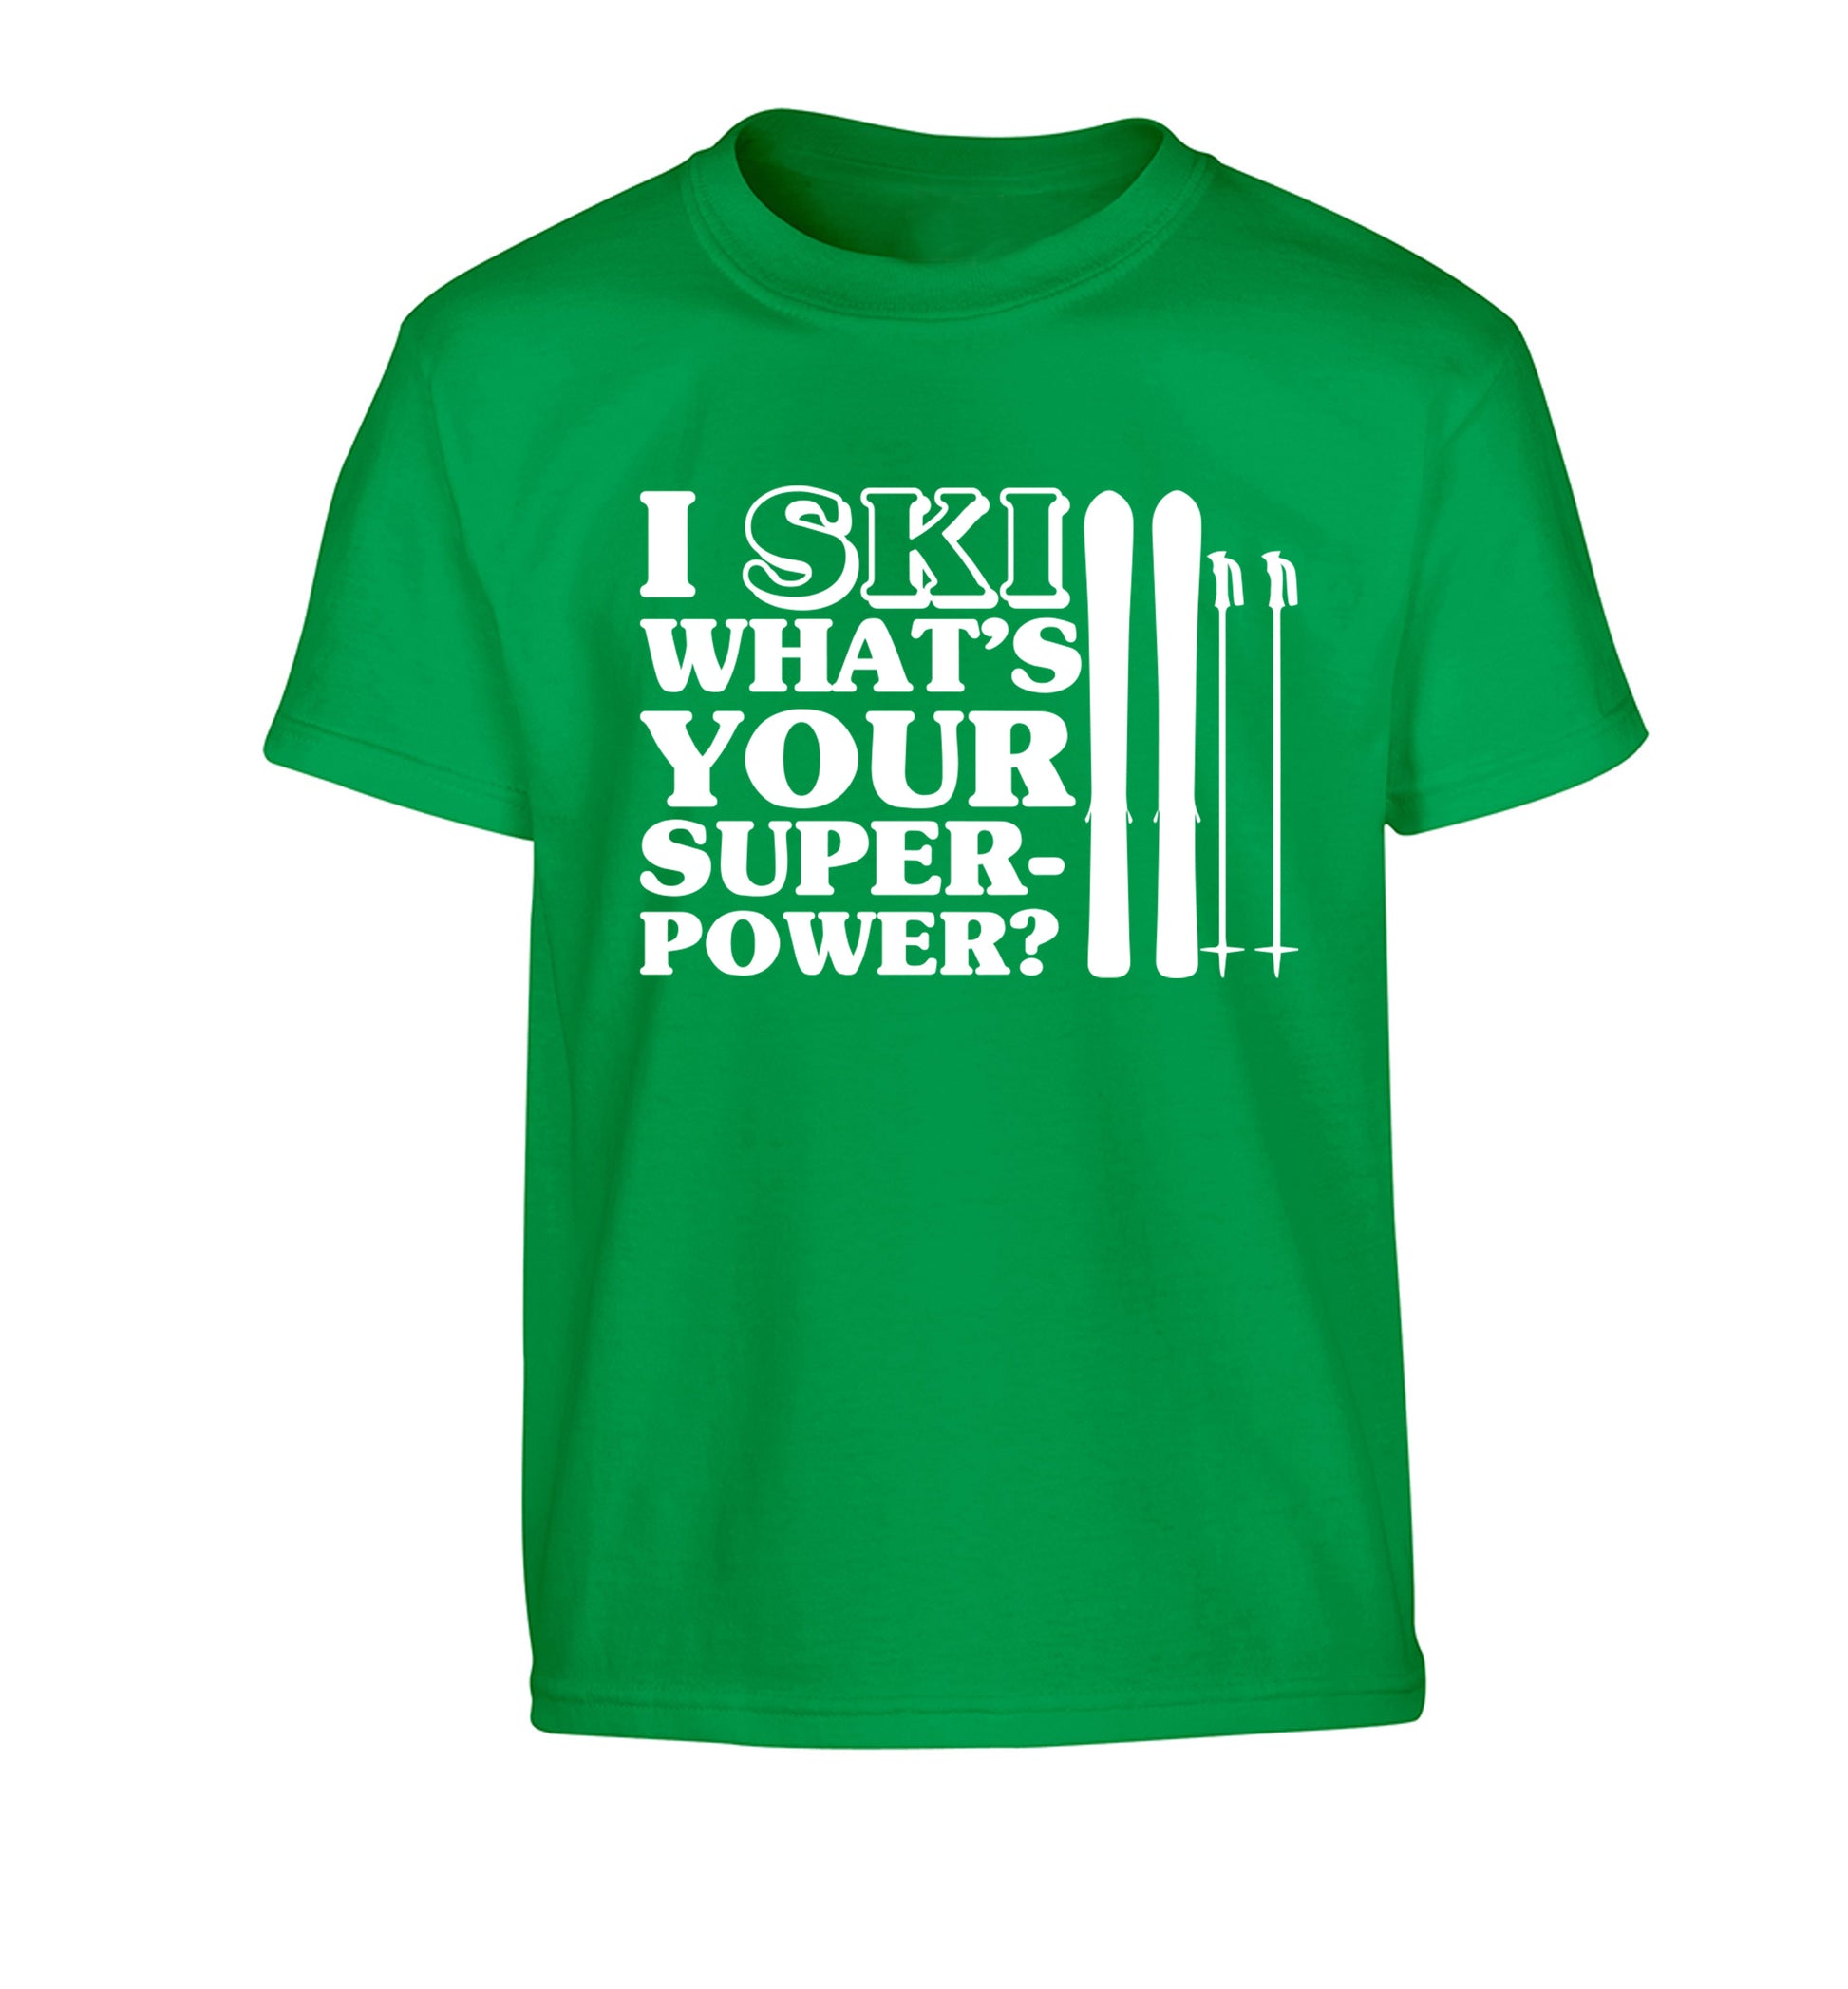 I ski what's your superpower? Children's green Tshirt 12-14 Years